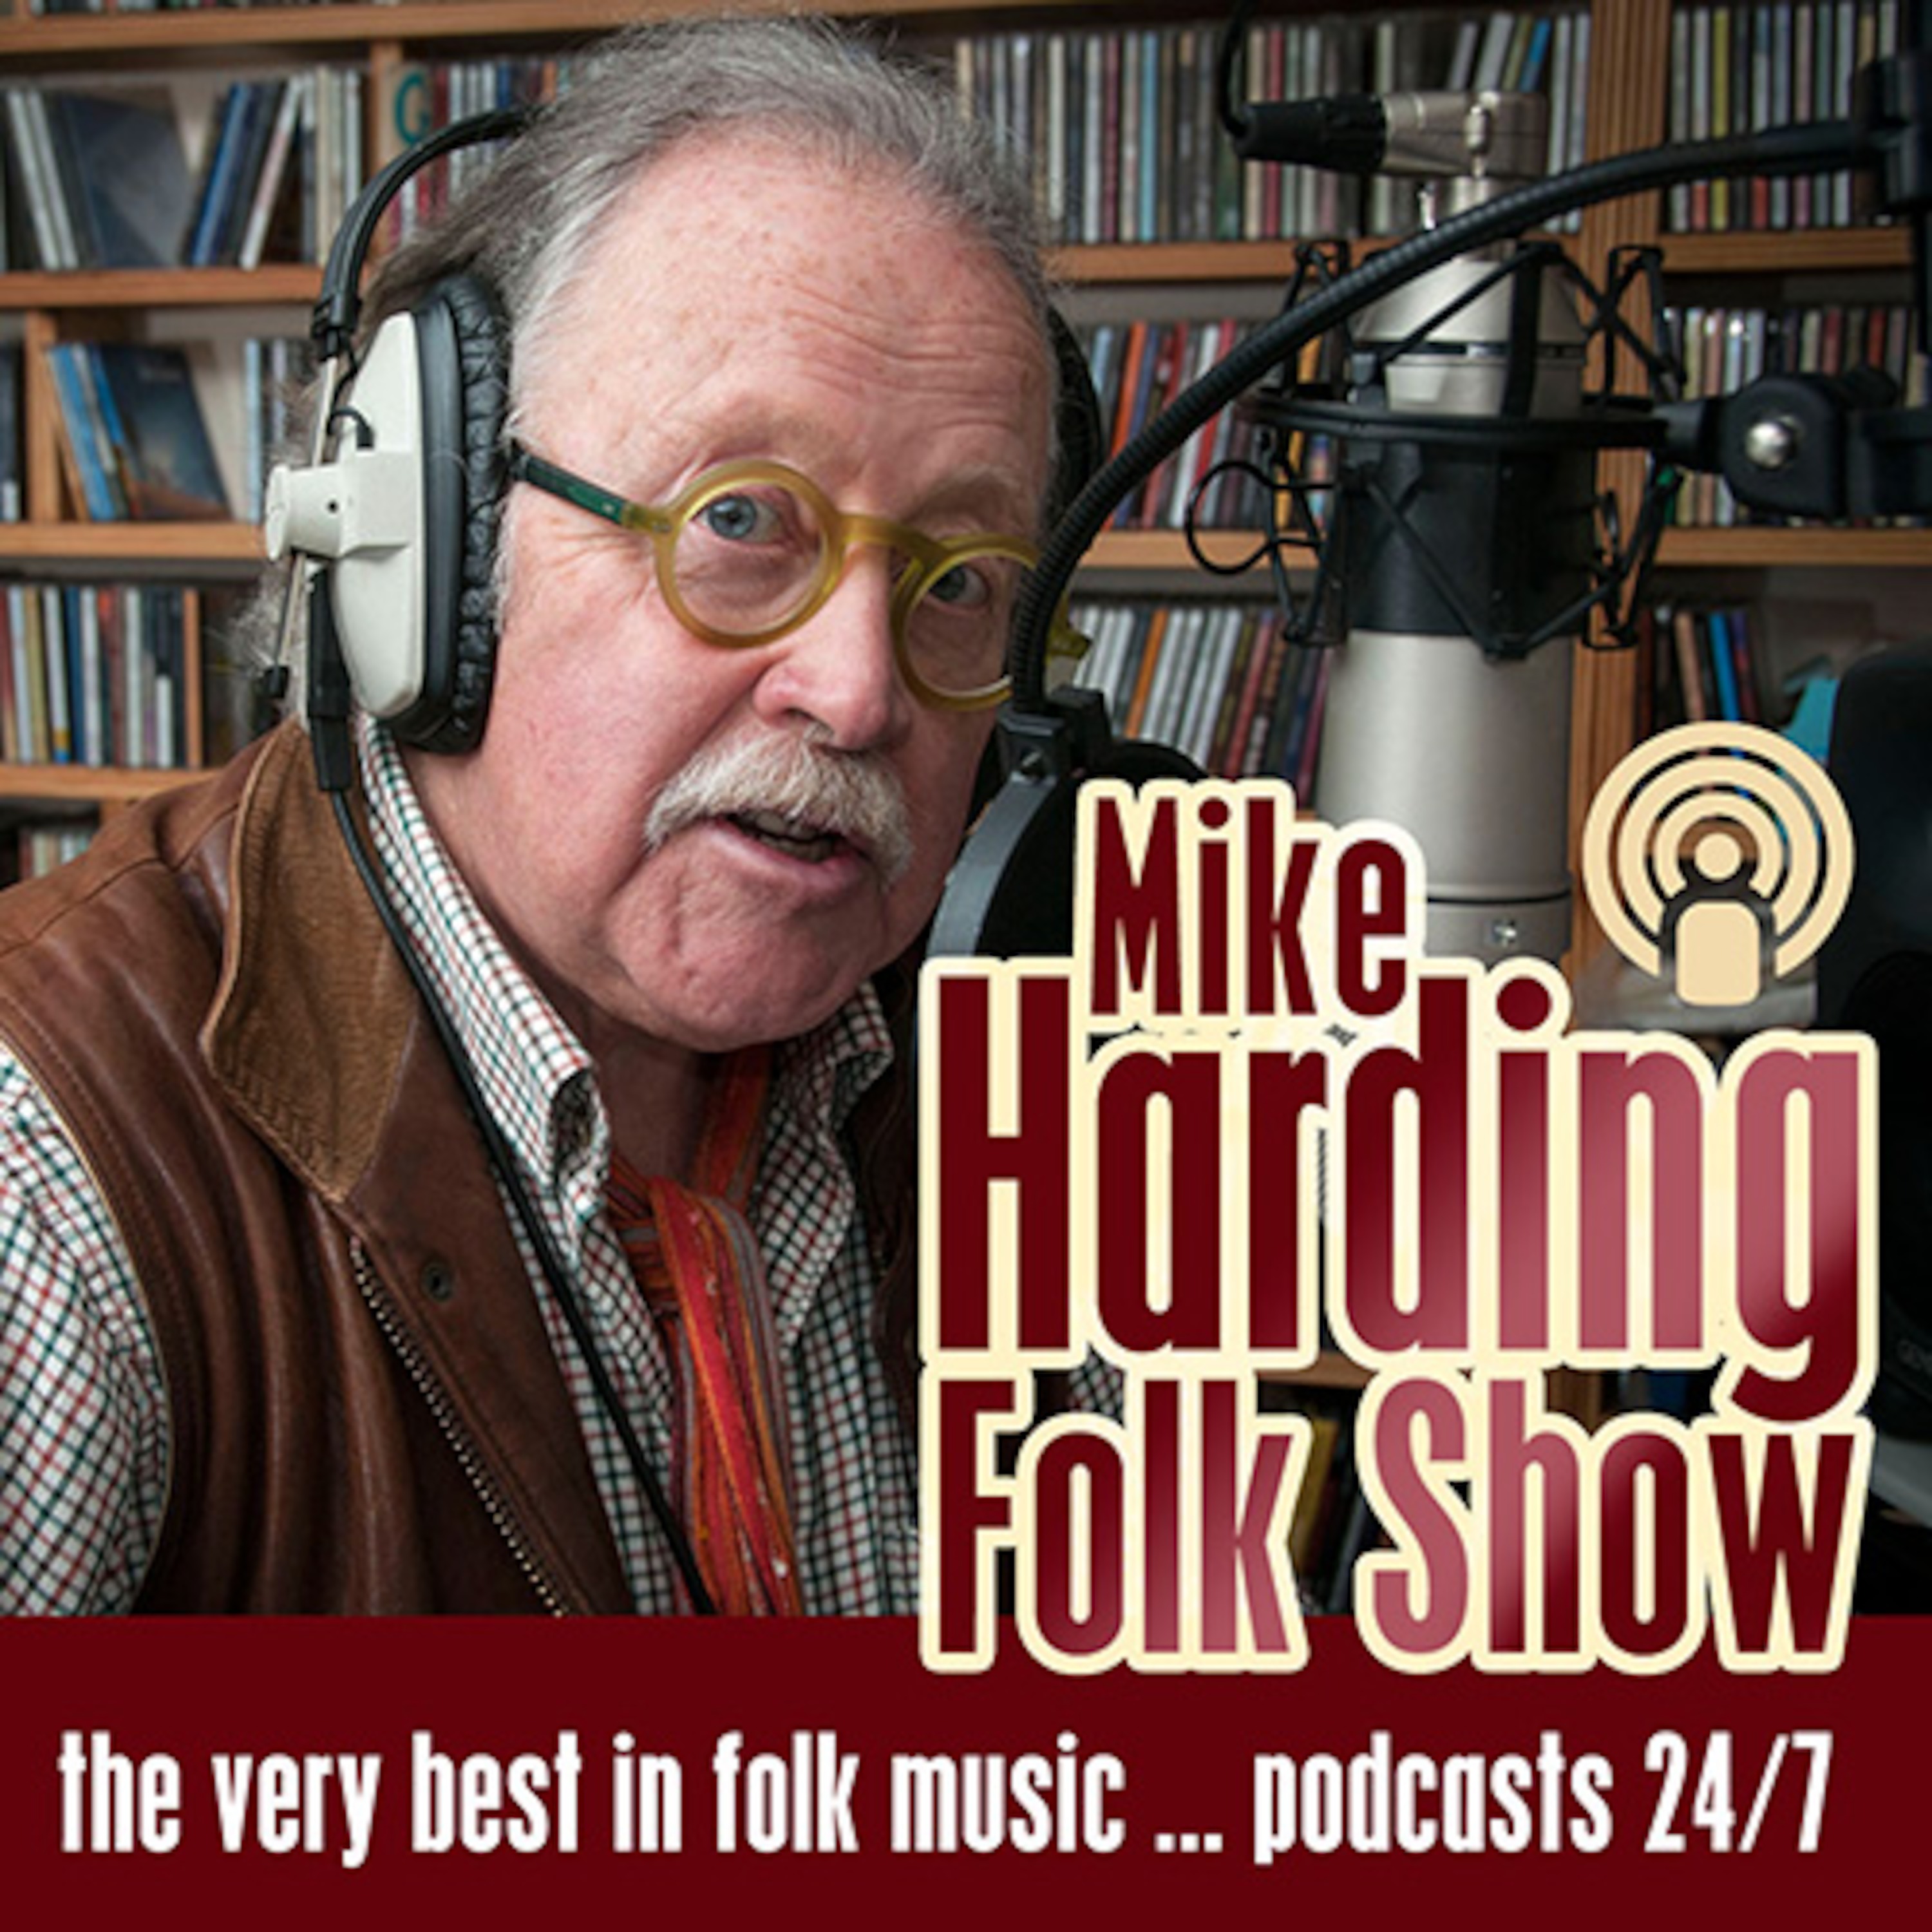 Mike Harding Folk Show 209